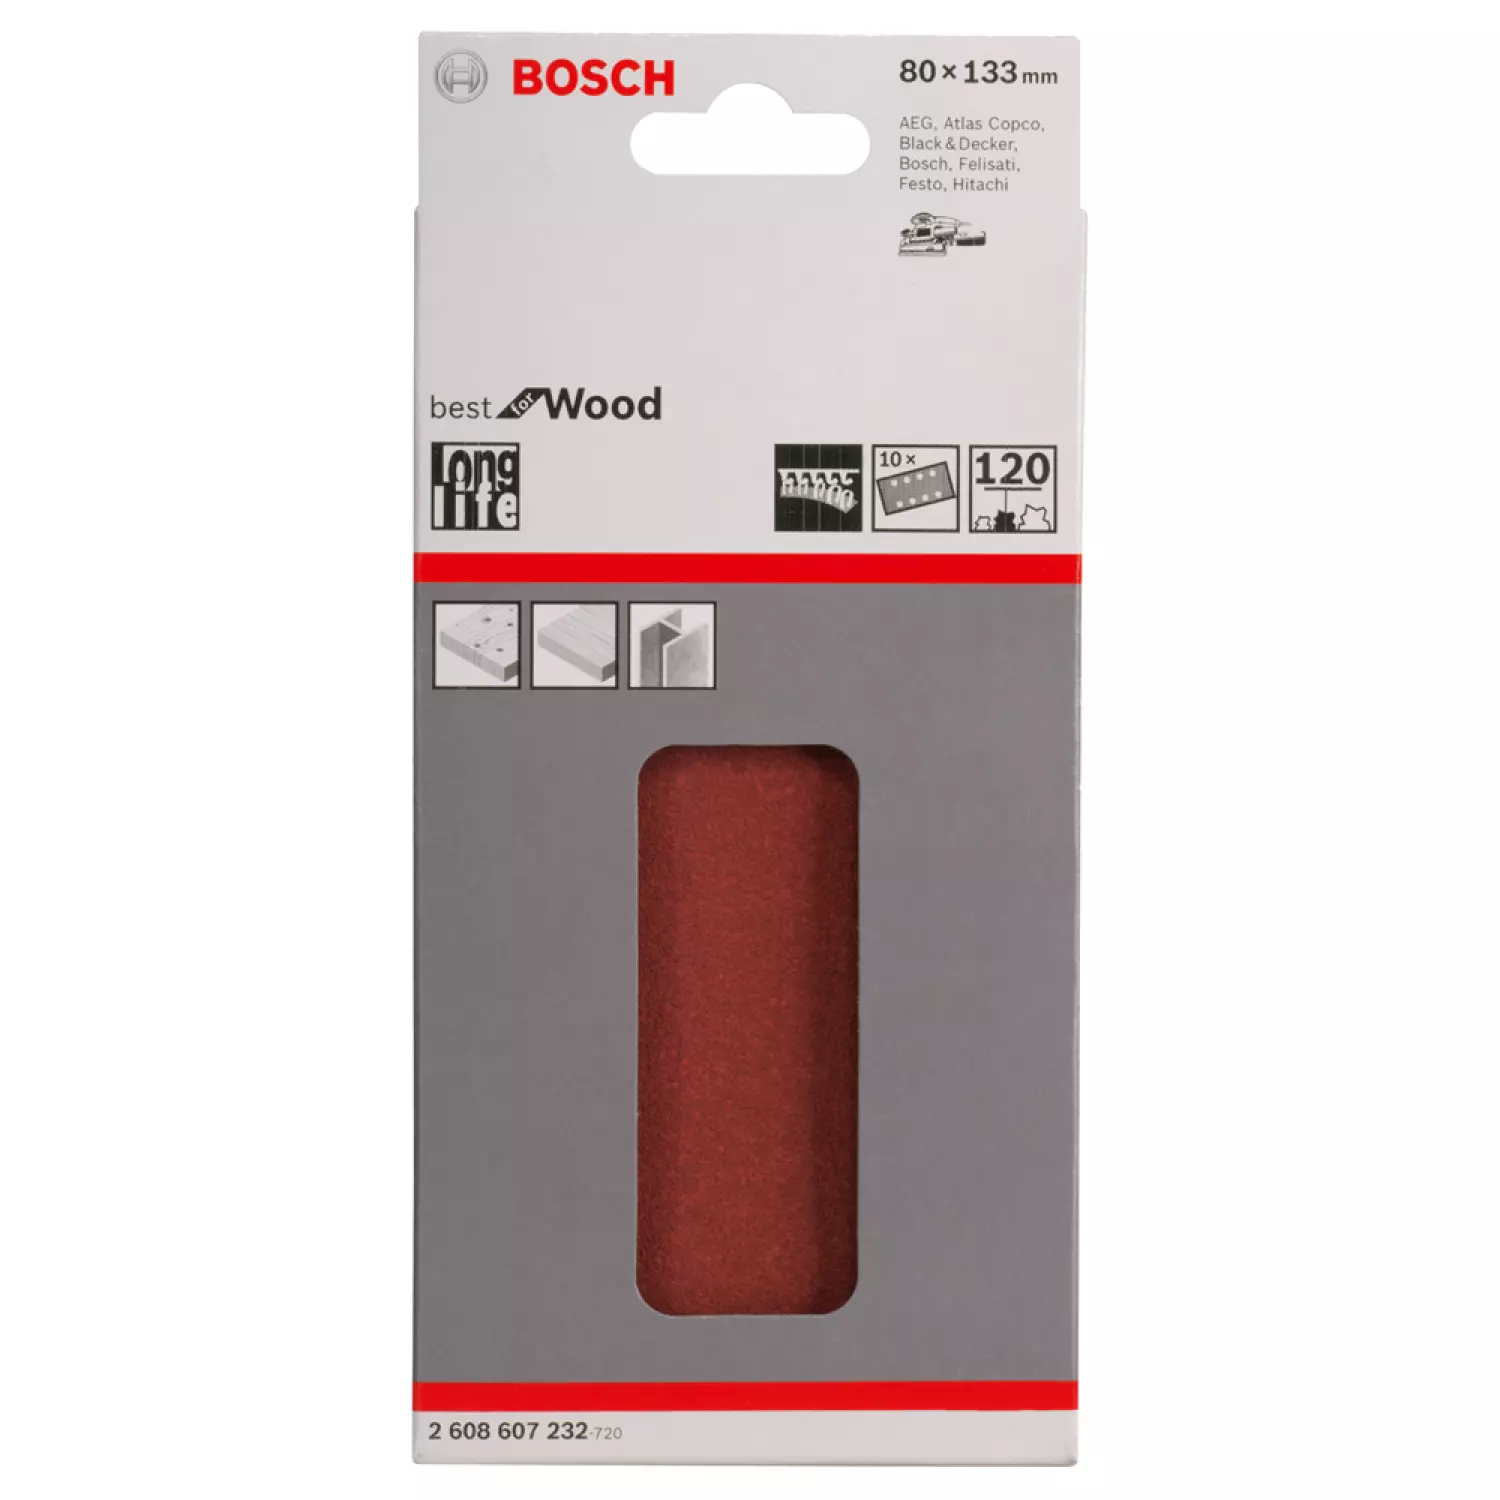 Bosch 06012A2300 - Ponceuse vibrante compacte GSS 160 Multi-usage-image